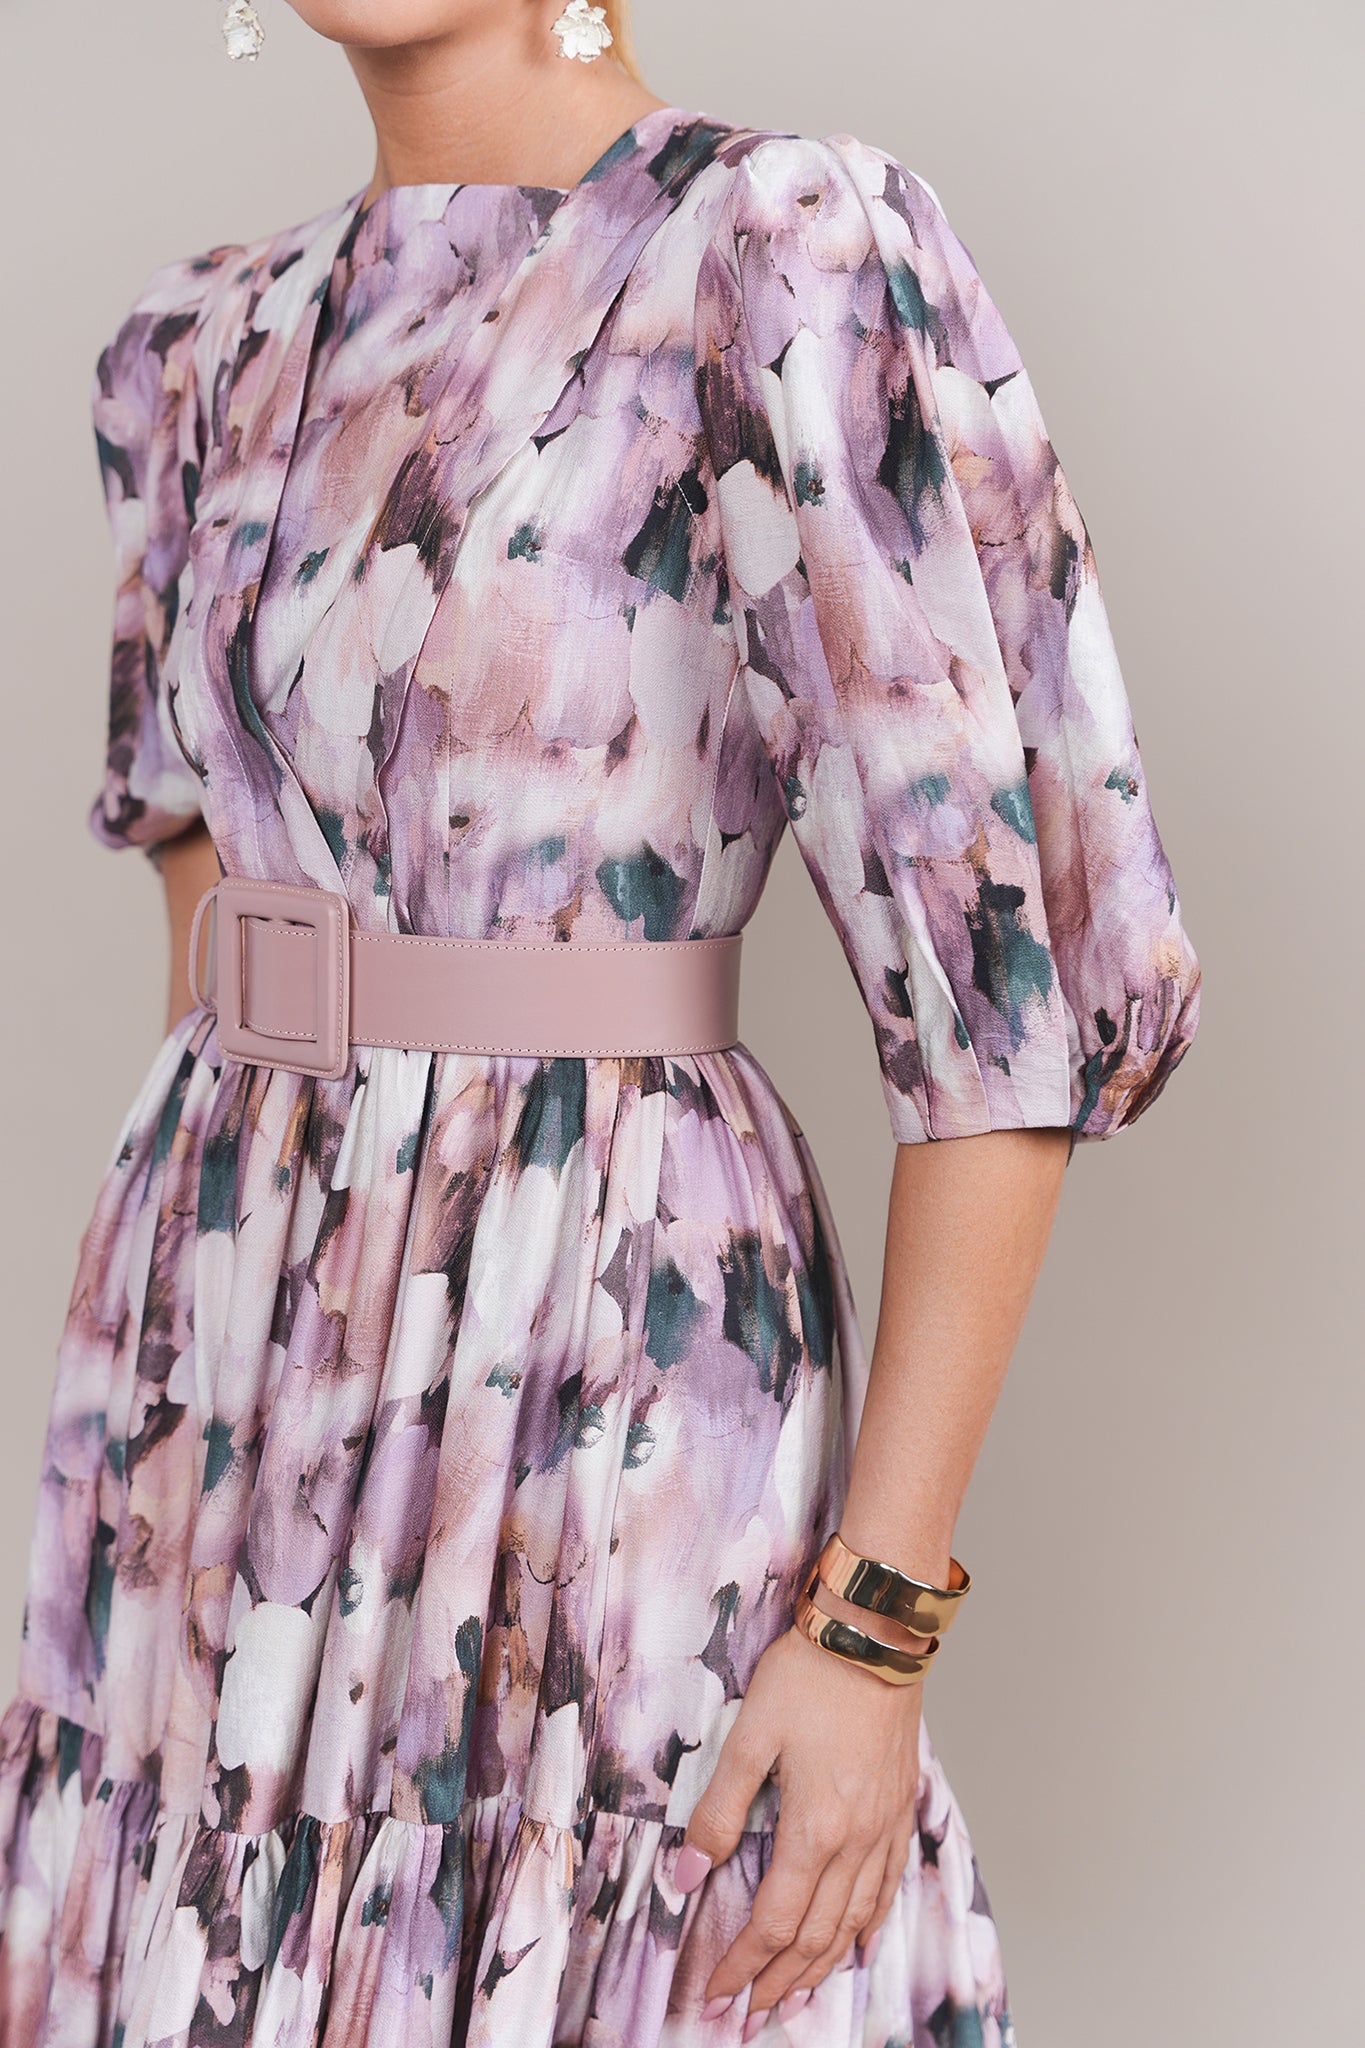 Ellie Convertible Dress in Lavender Mix Floral